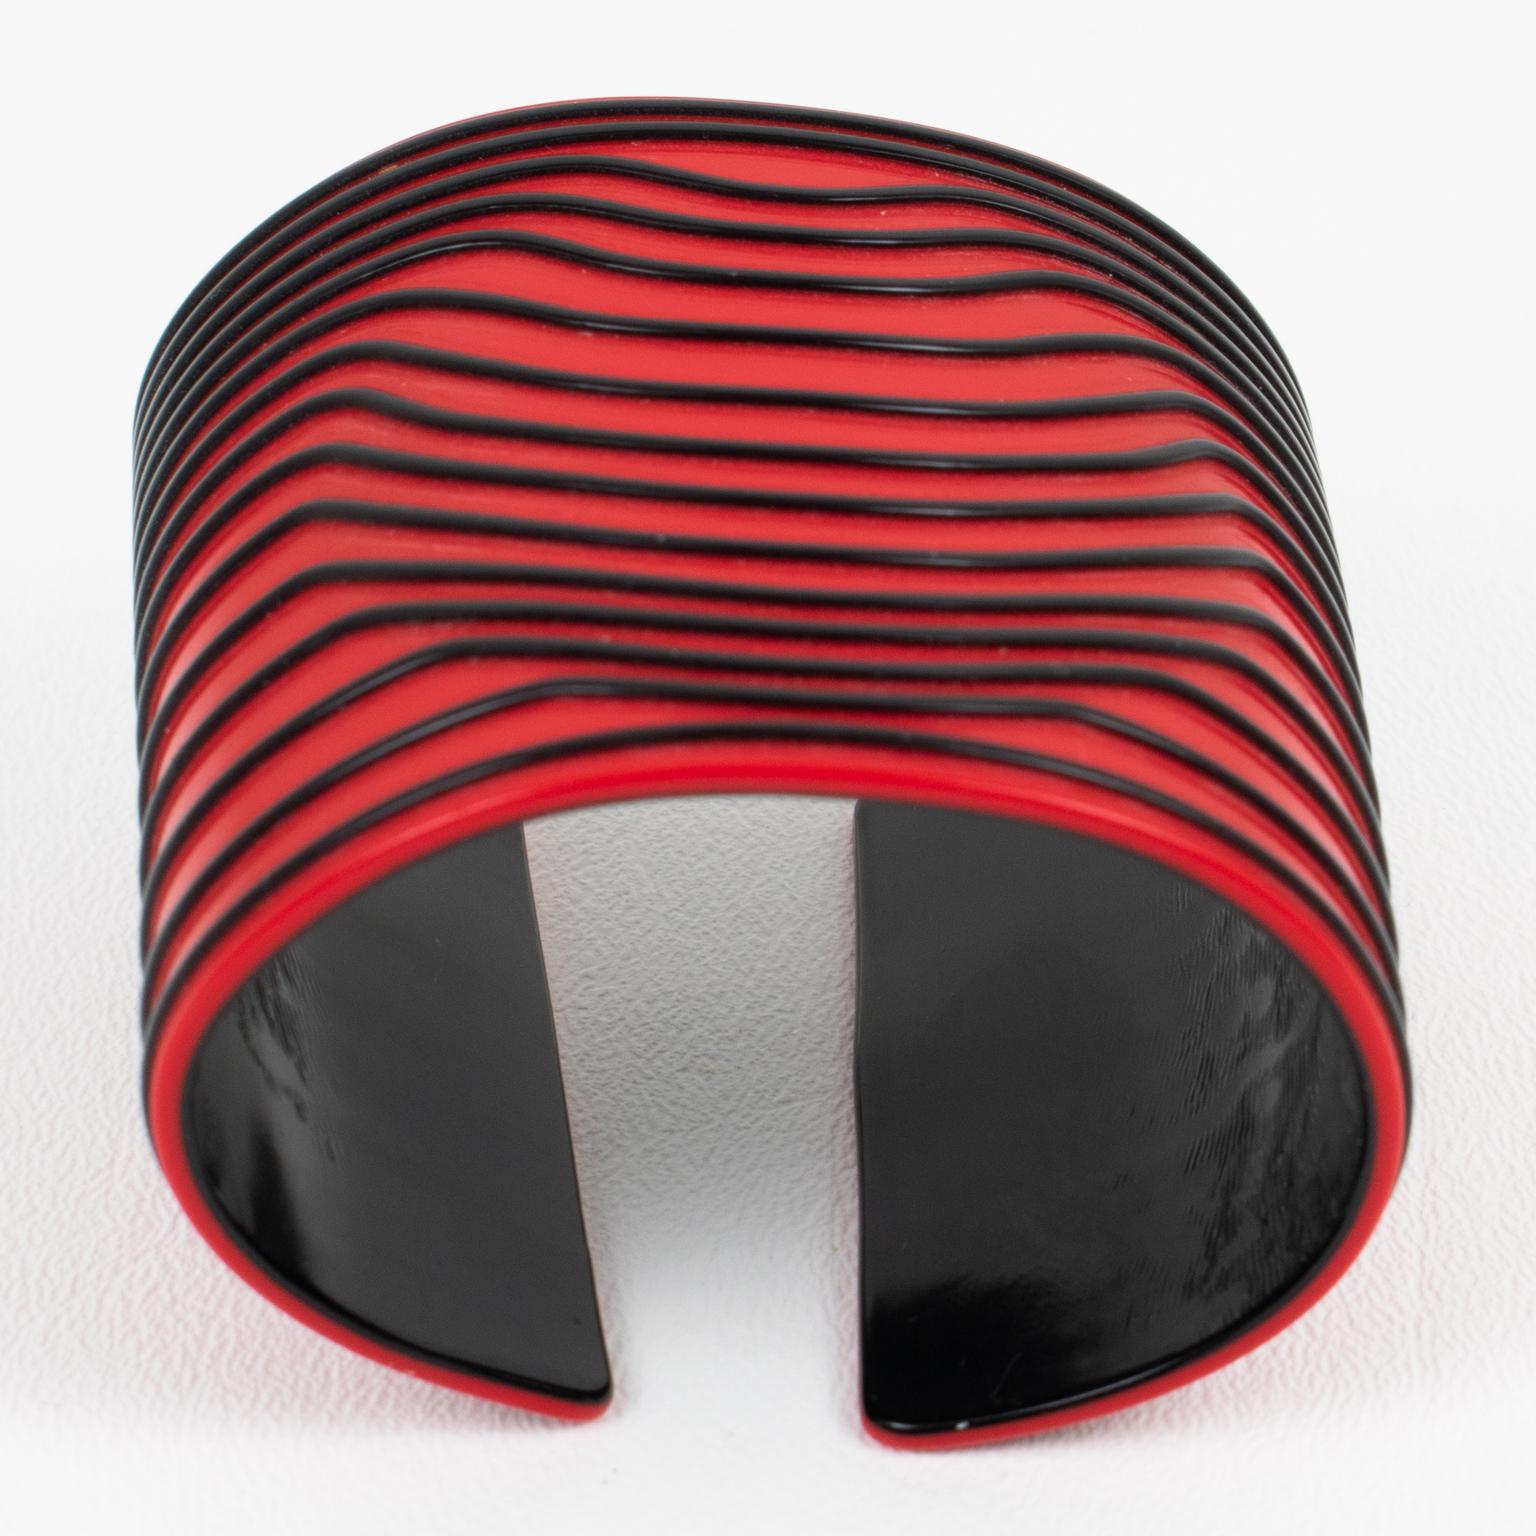 Jean Paul Gaultier Paris Red and Black Resin Cuff Bracelet Kinetic Effect 3